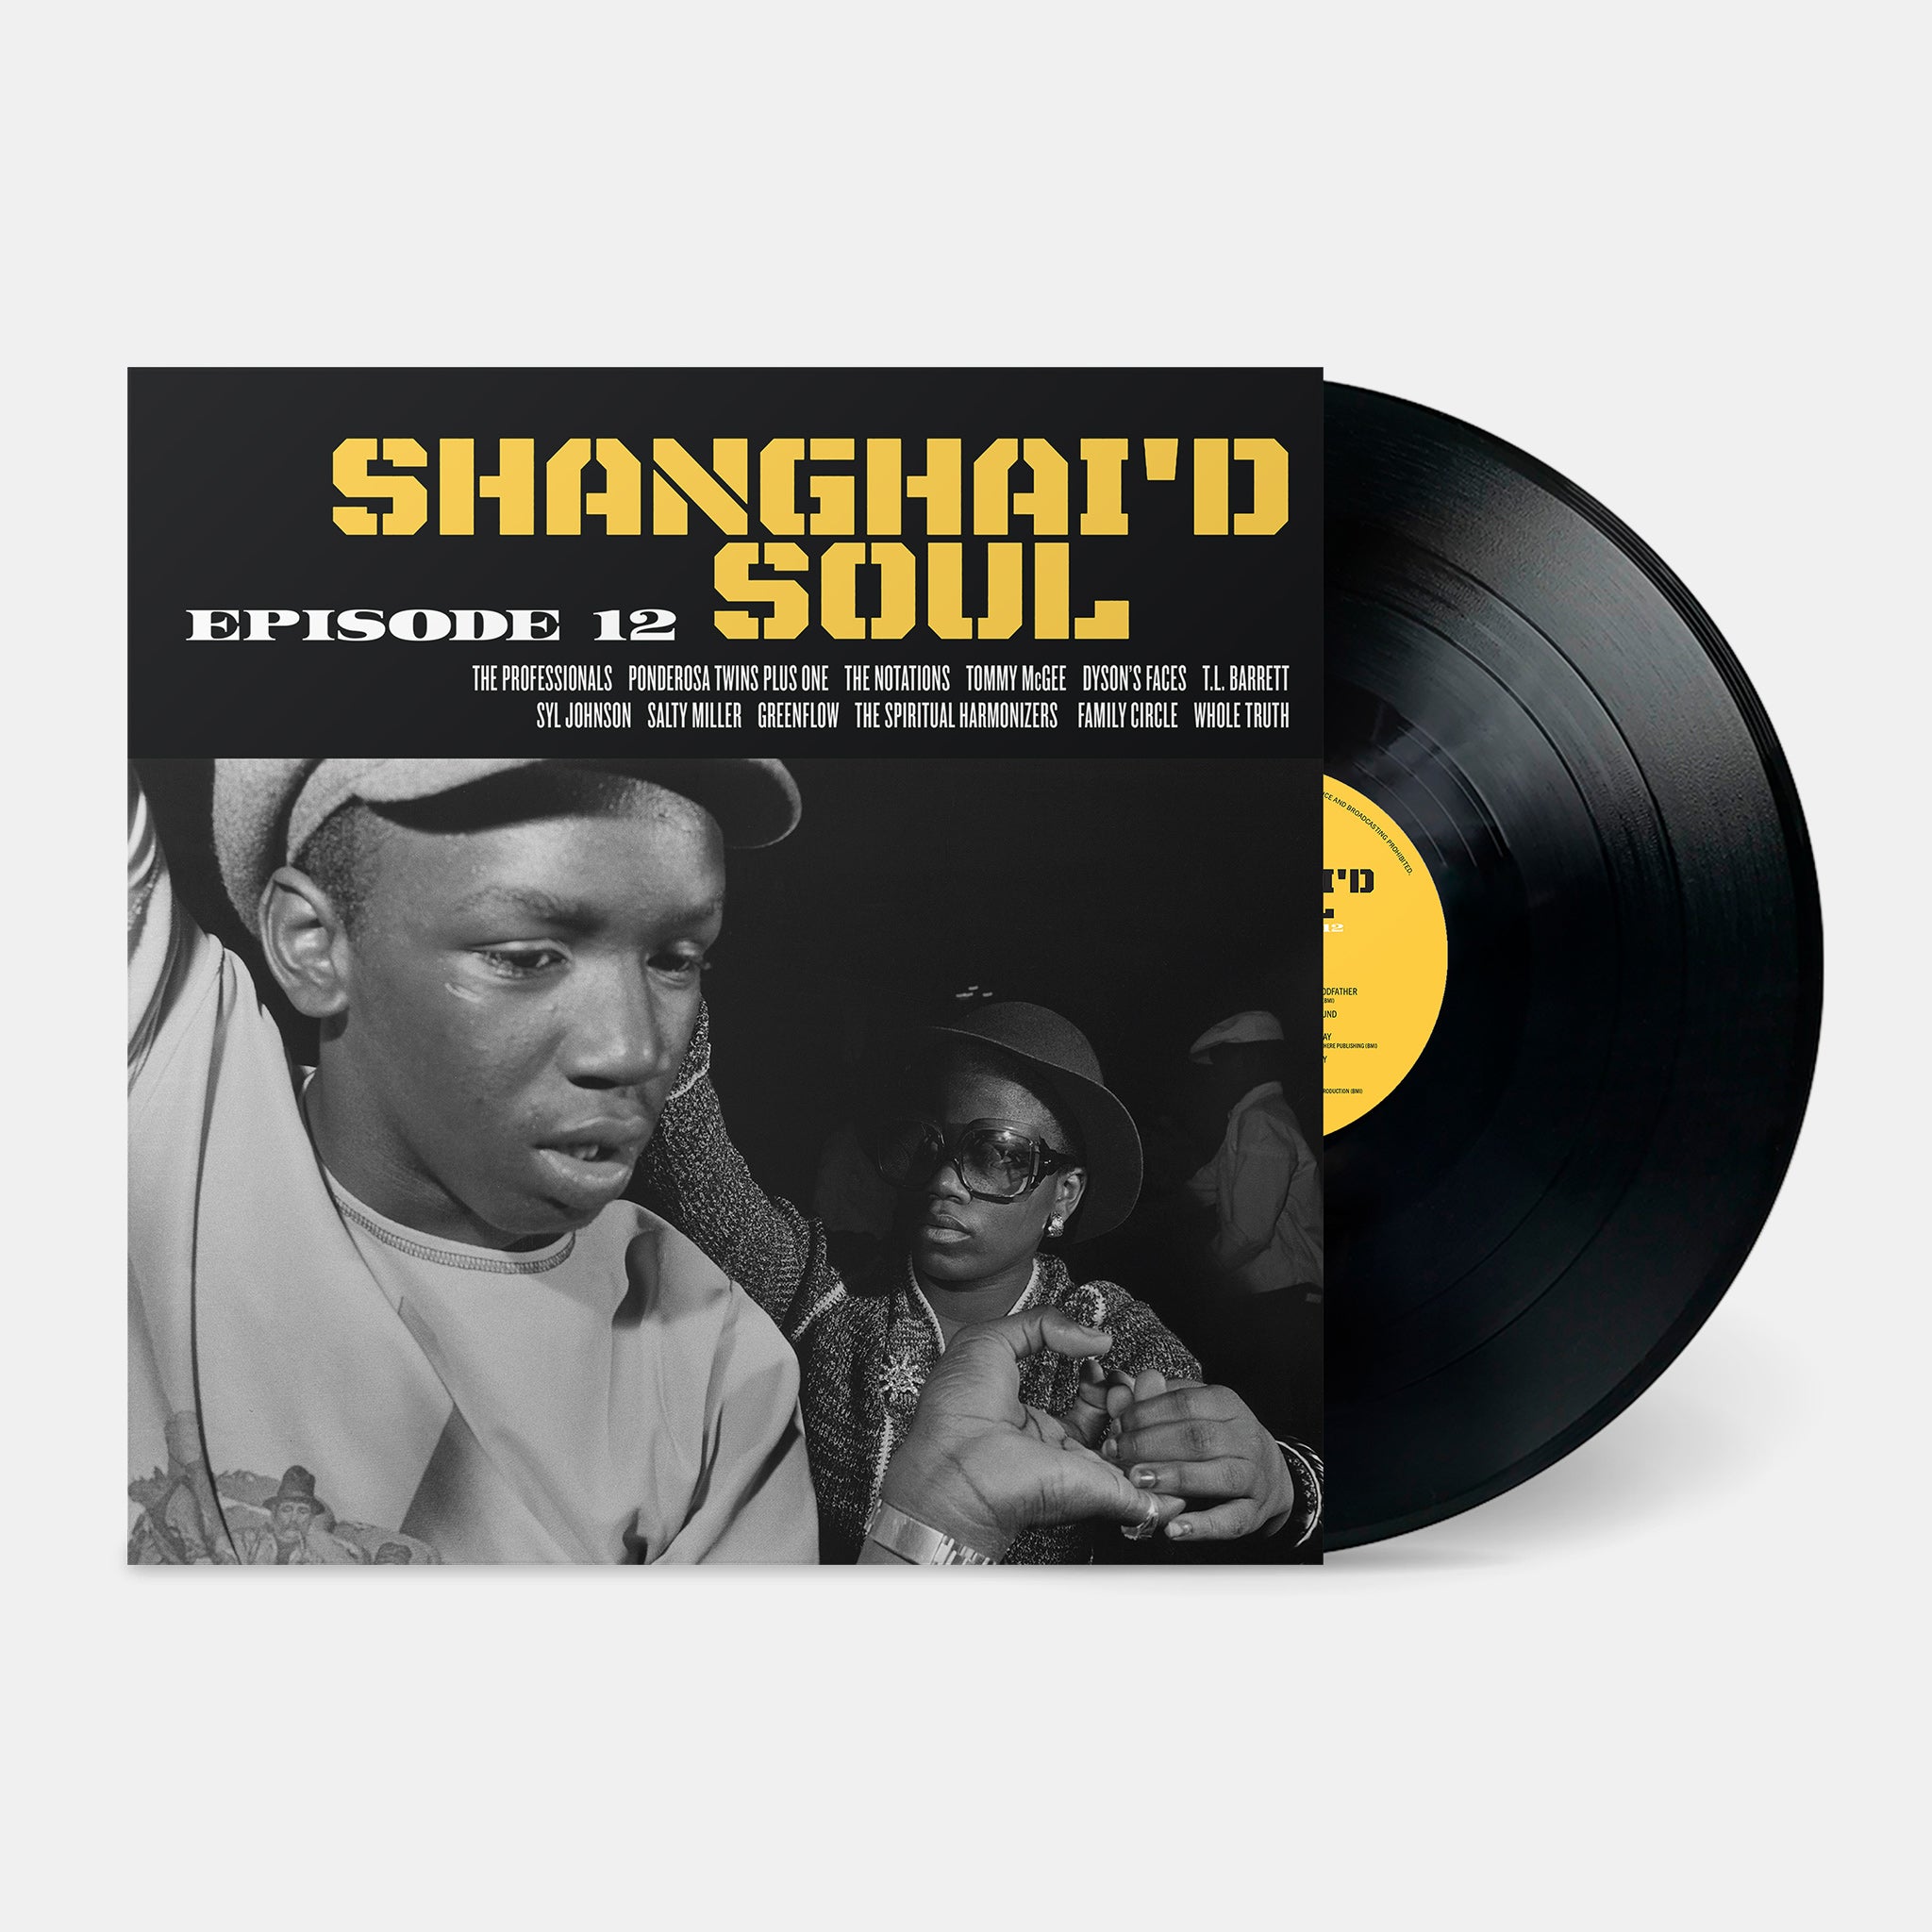 Various Artists - Shanghai'd Soul Episode 12